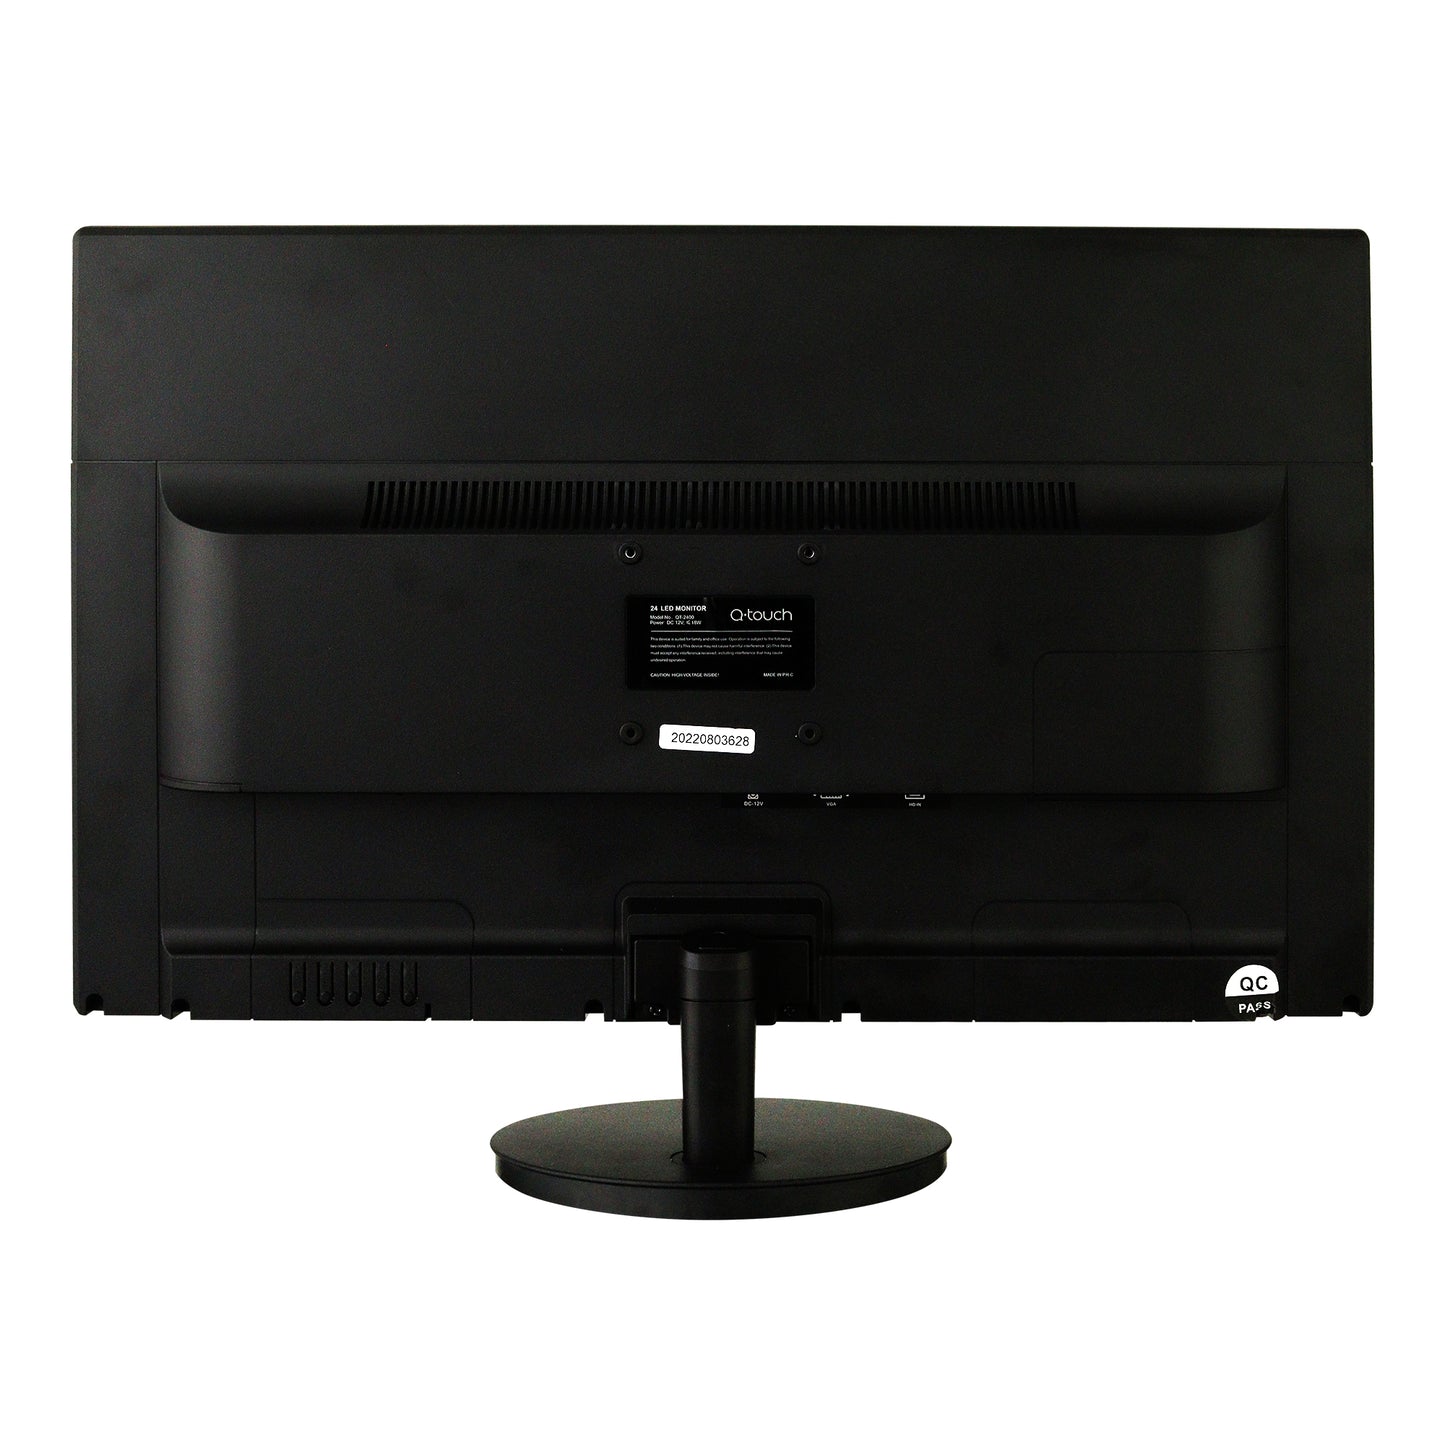 Monitor 24" LED Resolución HD Qt-2400